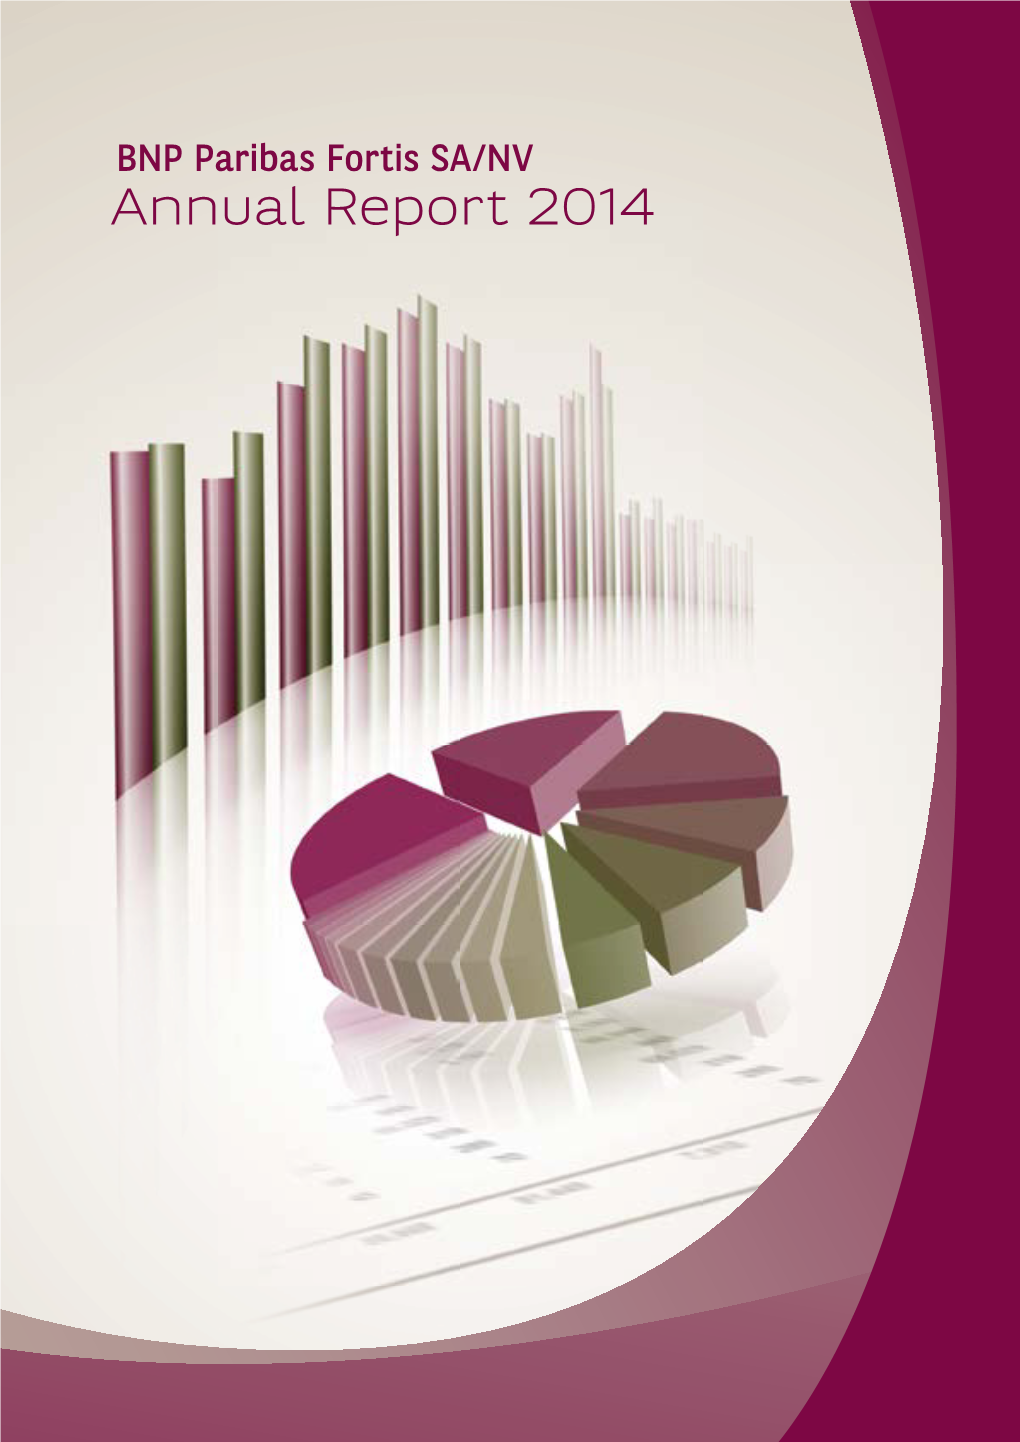 Annual Report 2014 BNP Paribas Fortis SA/NV 23/02/15 11:50